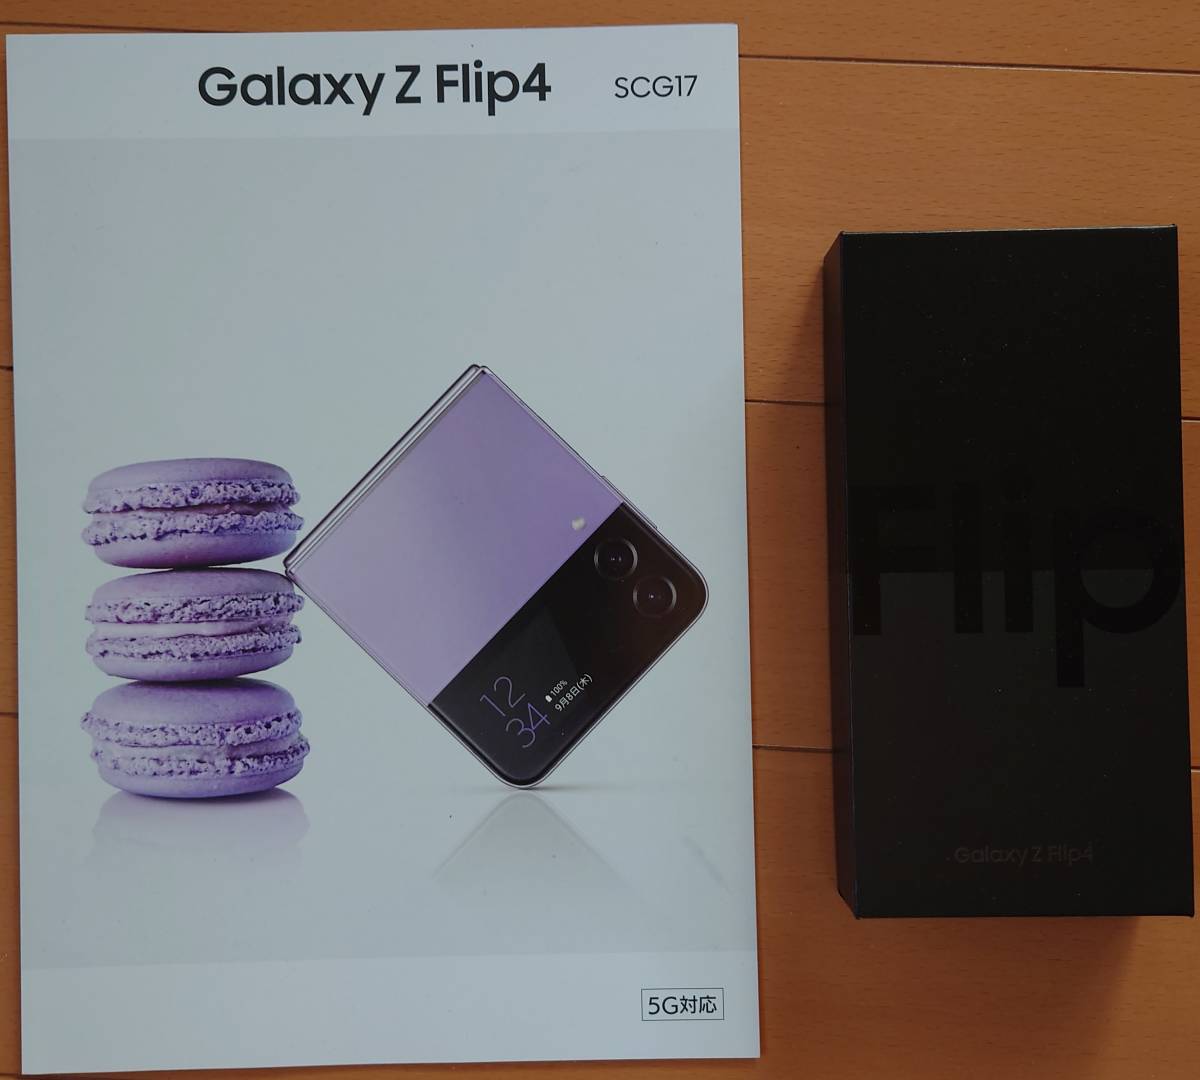 SEAL限定商品 Galaxy Z Flip4 SCG17 au版 128GB 5G グラファイト 約4